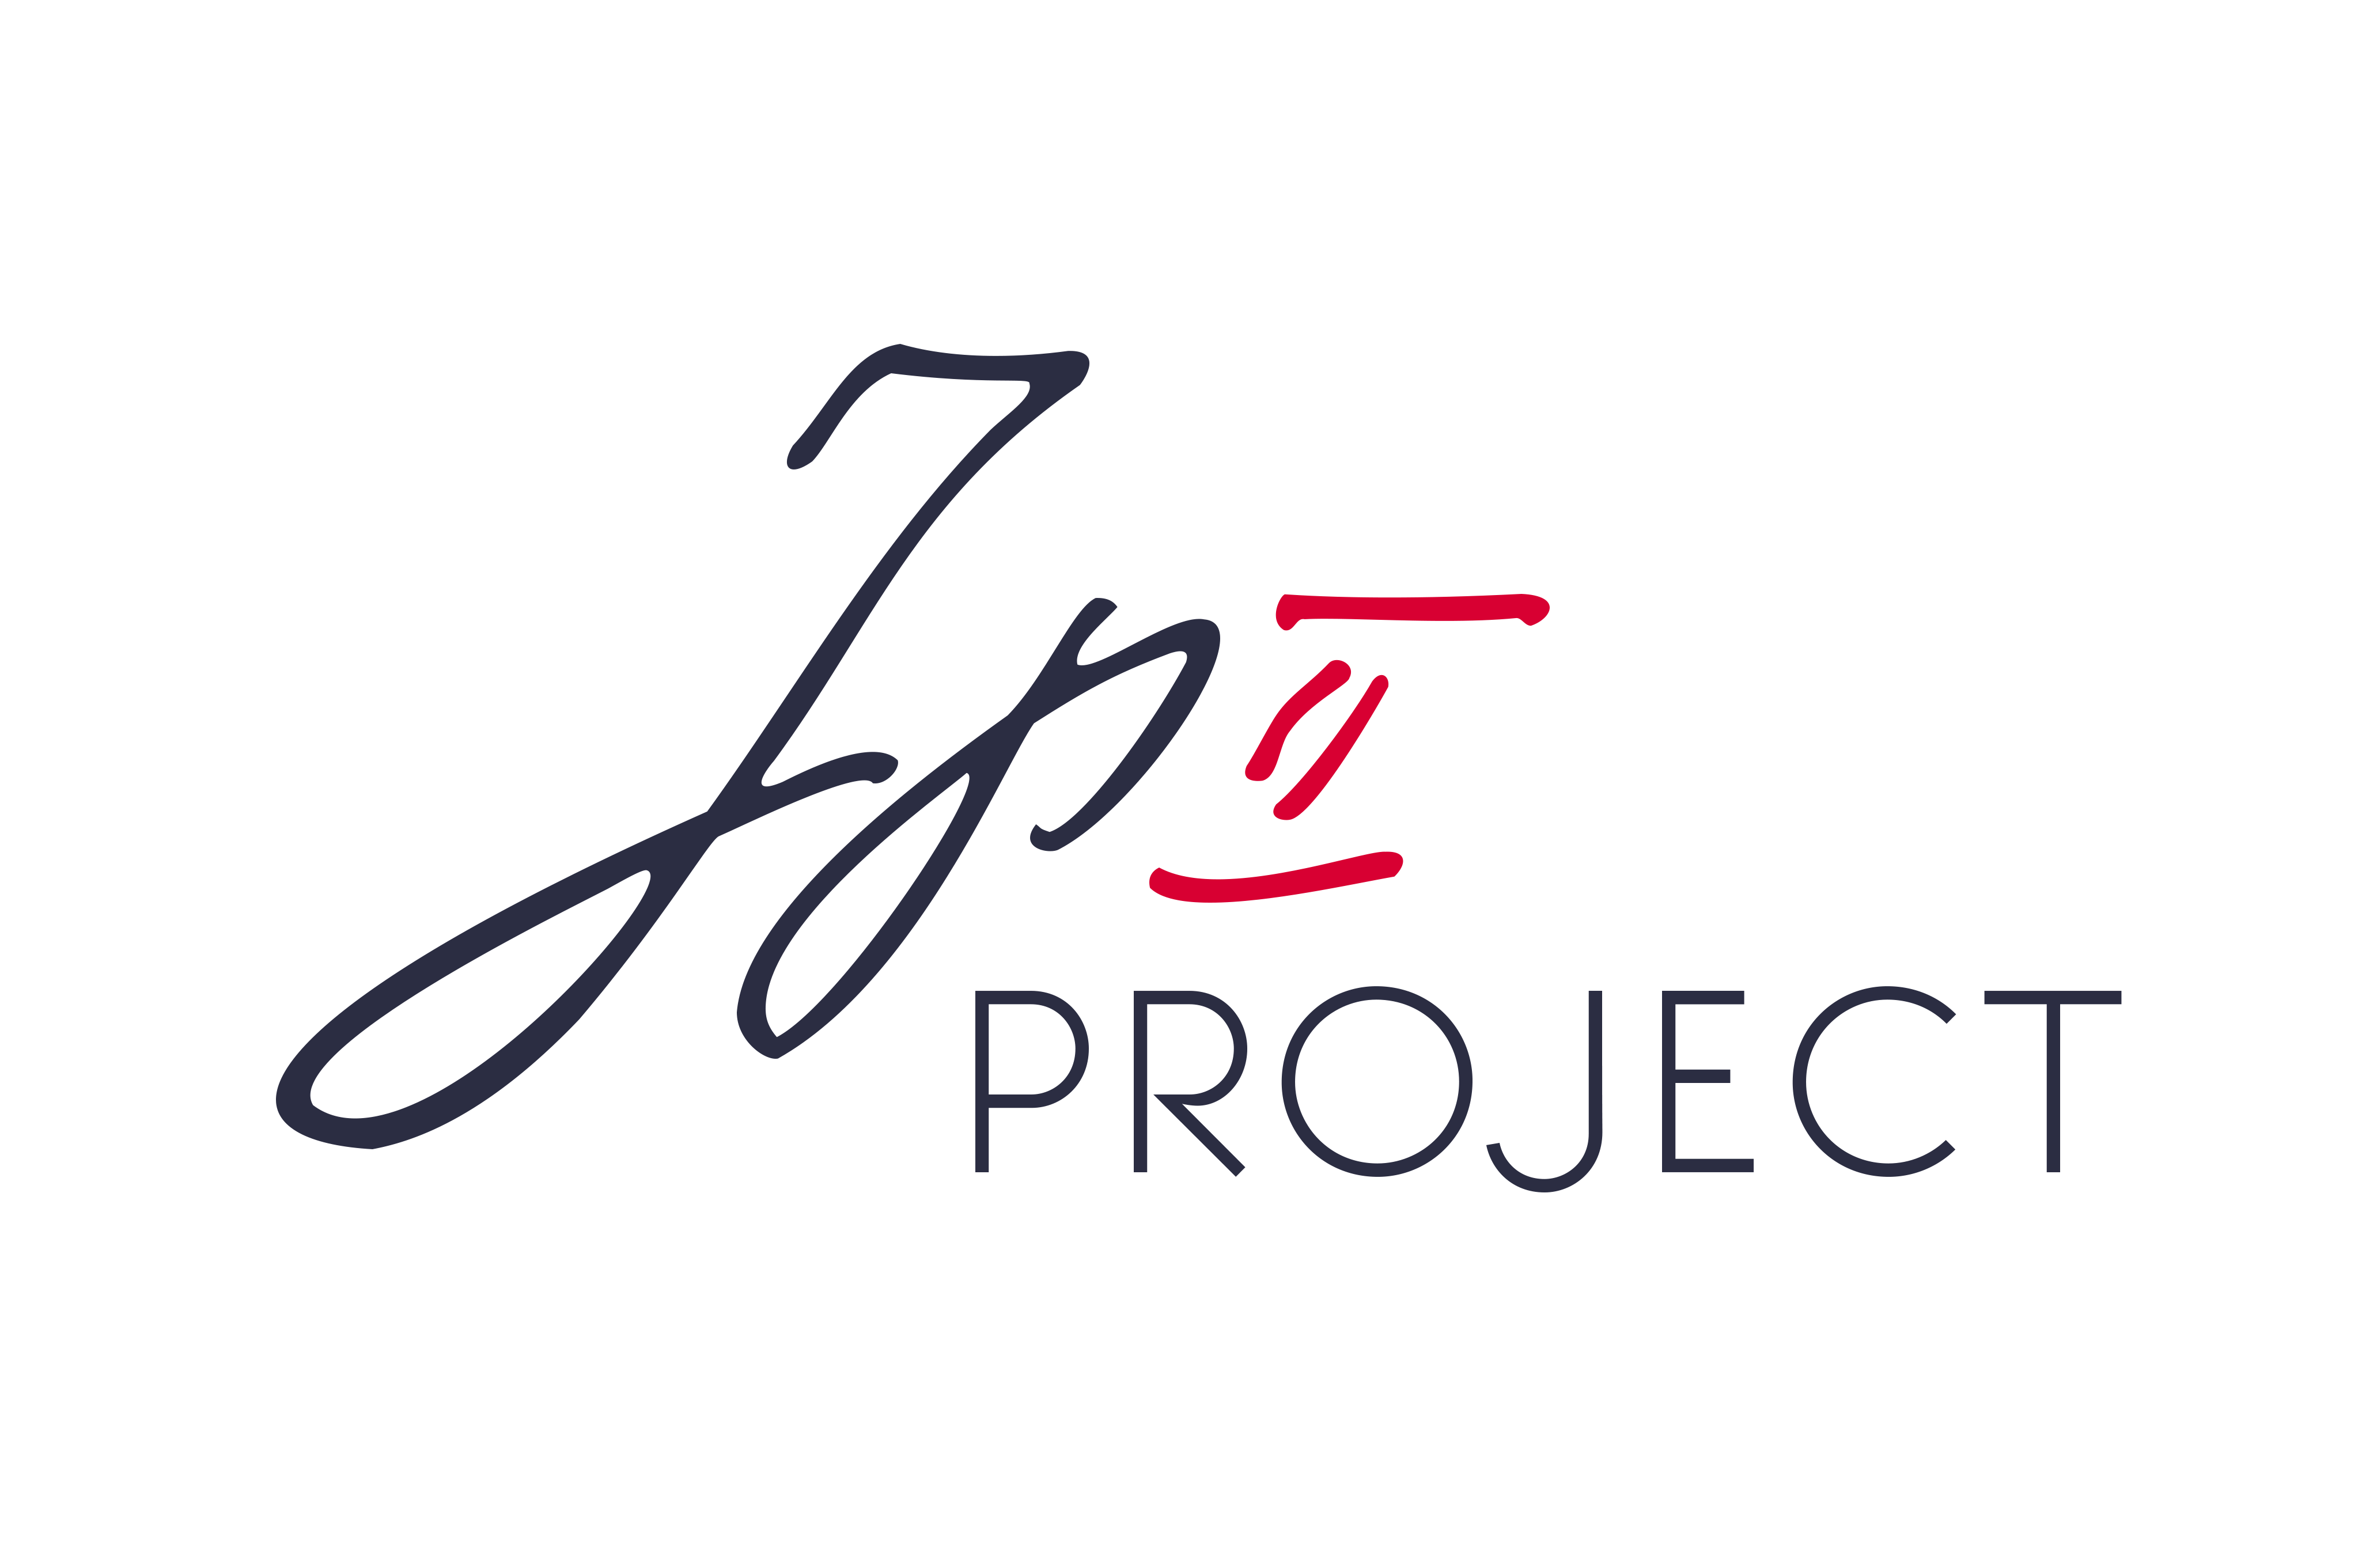 The John Paul II Project logo